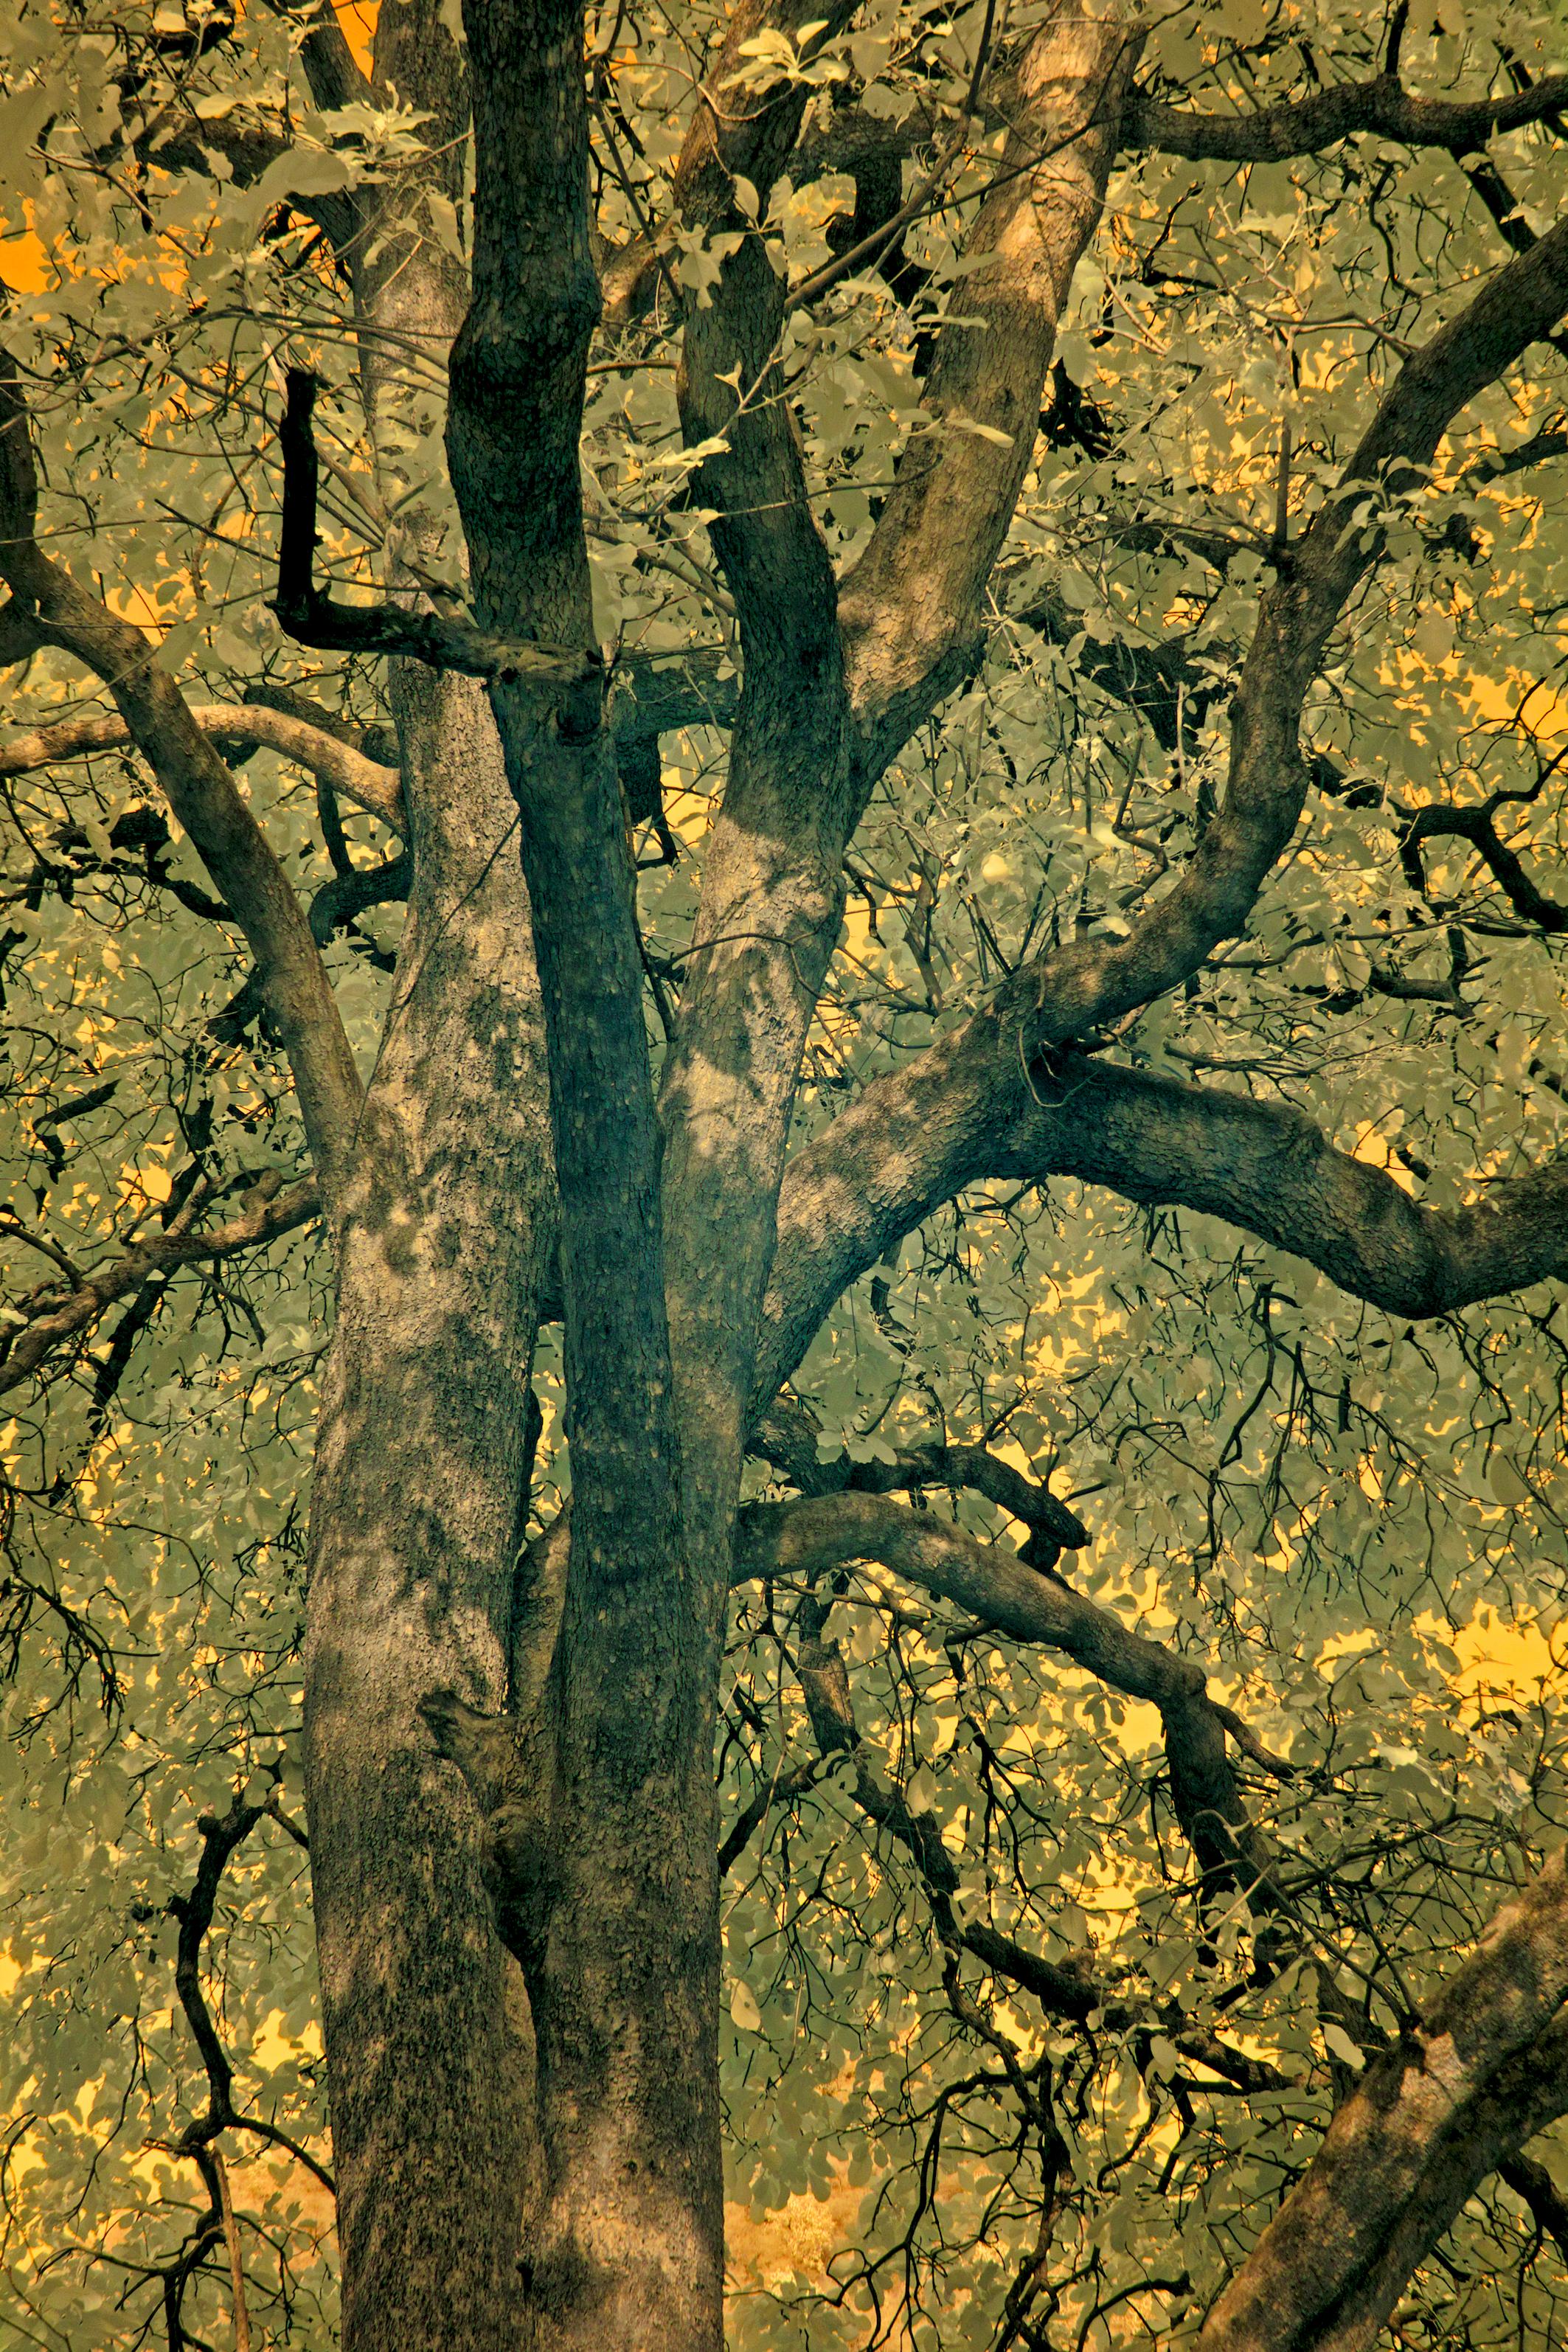 Aditya Dicky Singh Landscape Photograph - Large Landscape Tree Nature Wildlife Photograph India Orange Green Yellow Forest